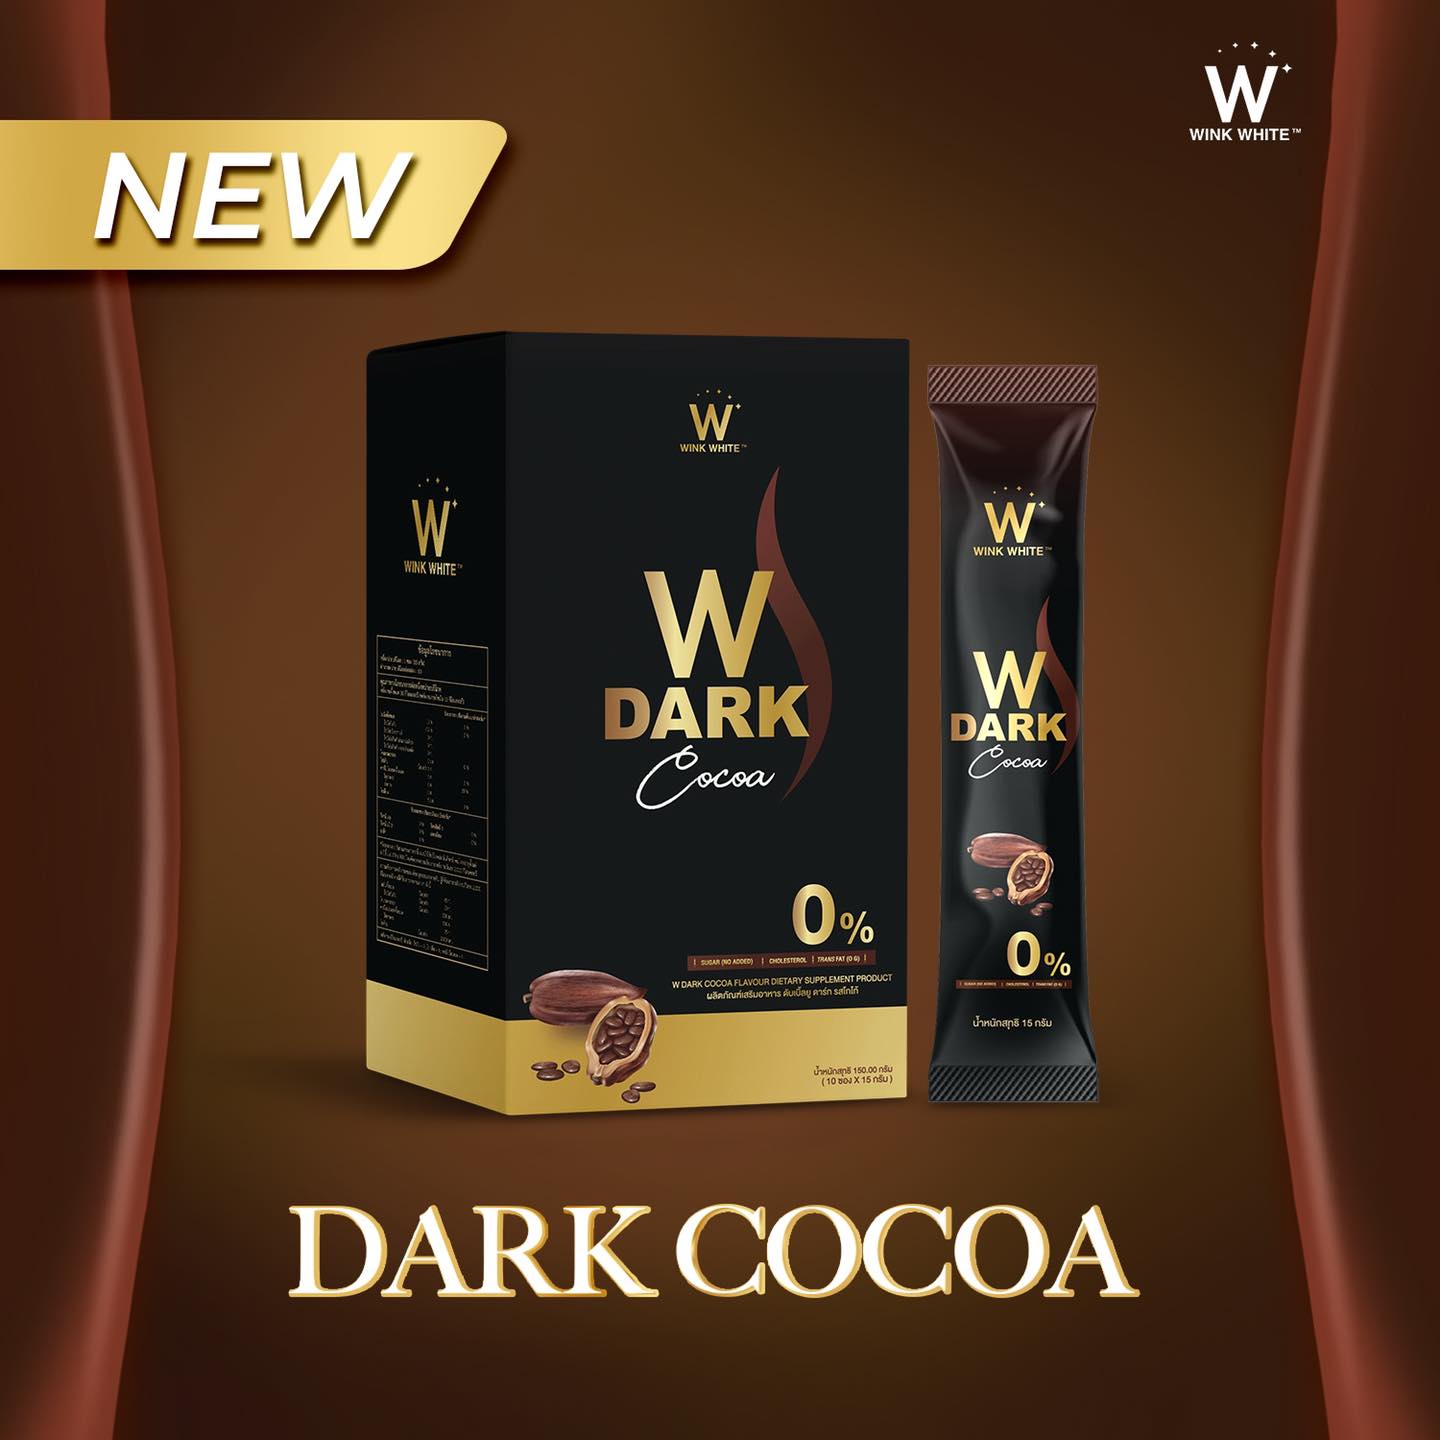 W DARK Cocoa ดับเบิ้ลยู ดาร์ก โกโก้ เครื่องดื่มรสโกโก้ ขนาด 15 กรัม 1 กล่อง มี 10 ซอง